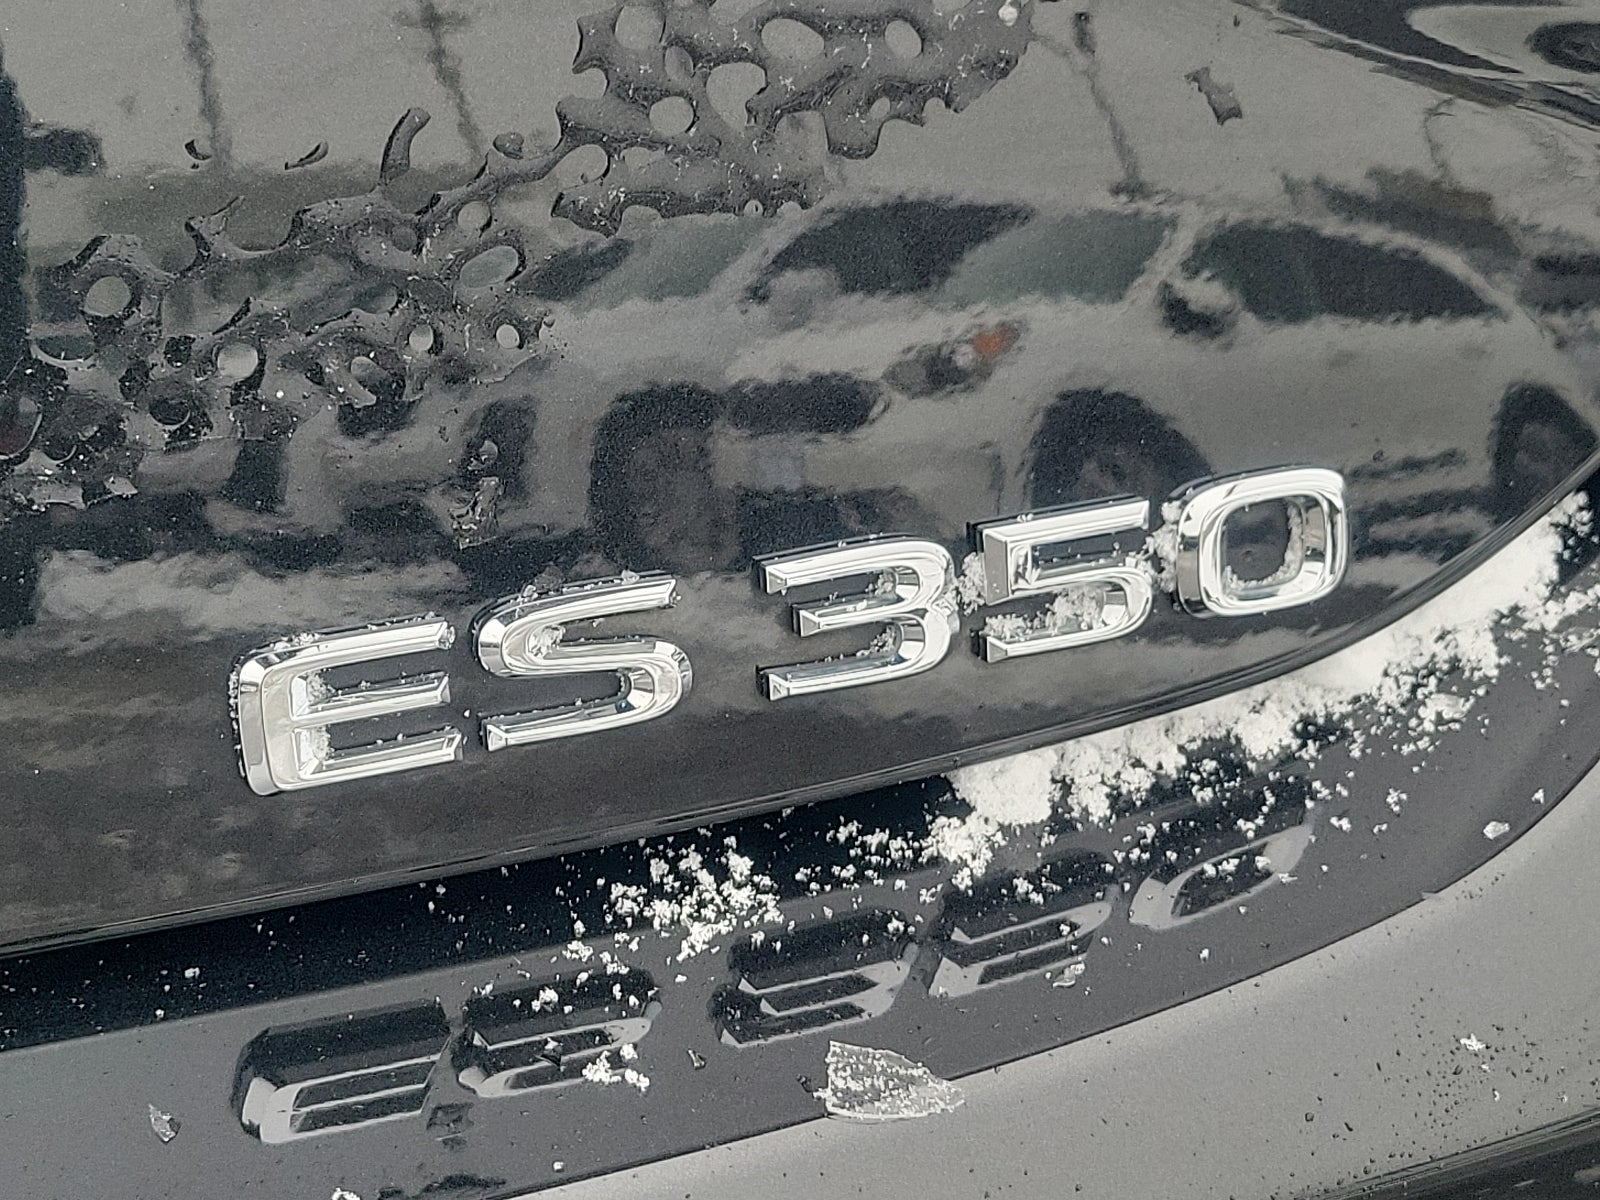 2019 Lexus ES 350 F SPORT